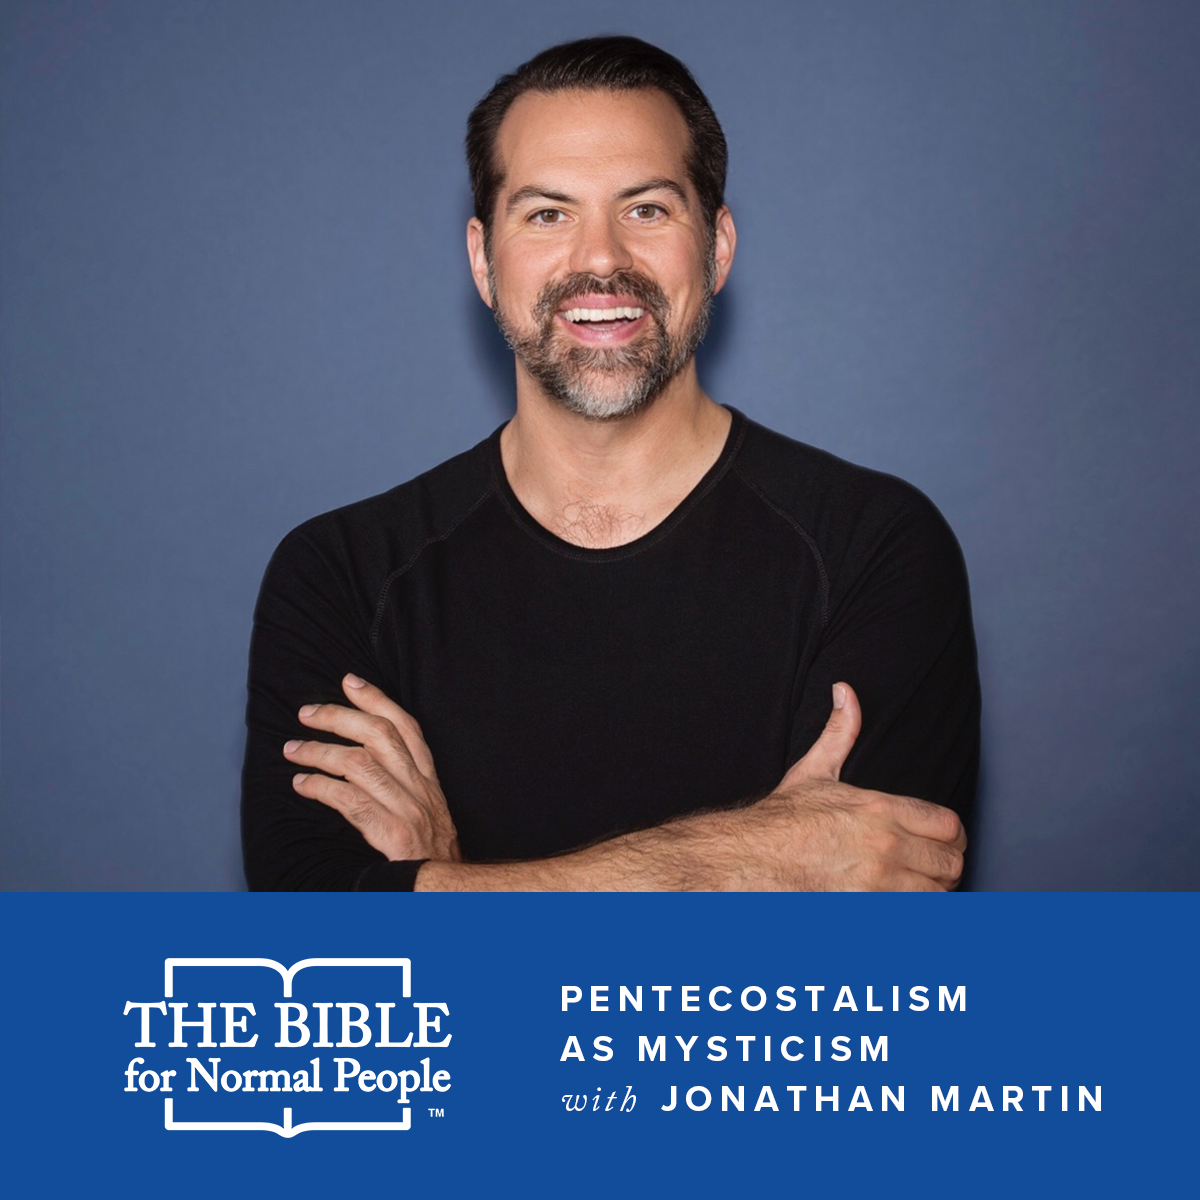 Interview with Jonathan Martin: Pentecostalism as Mysticism